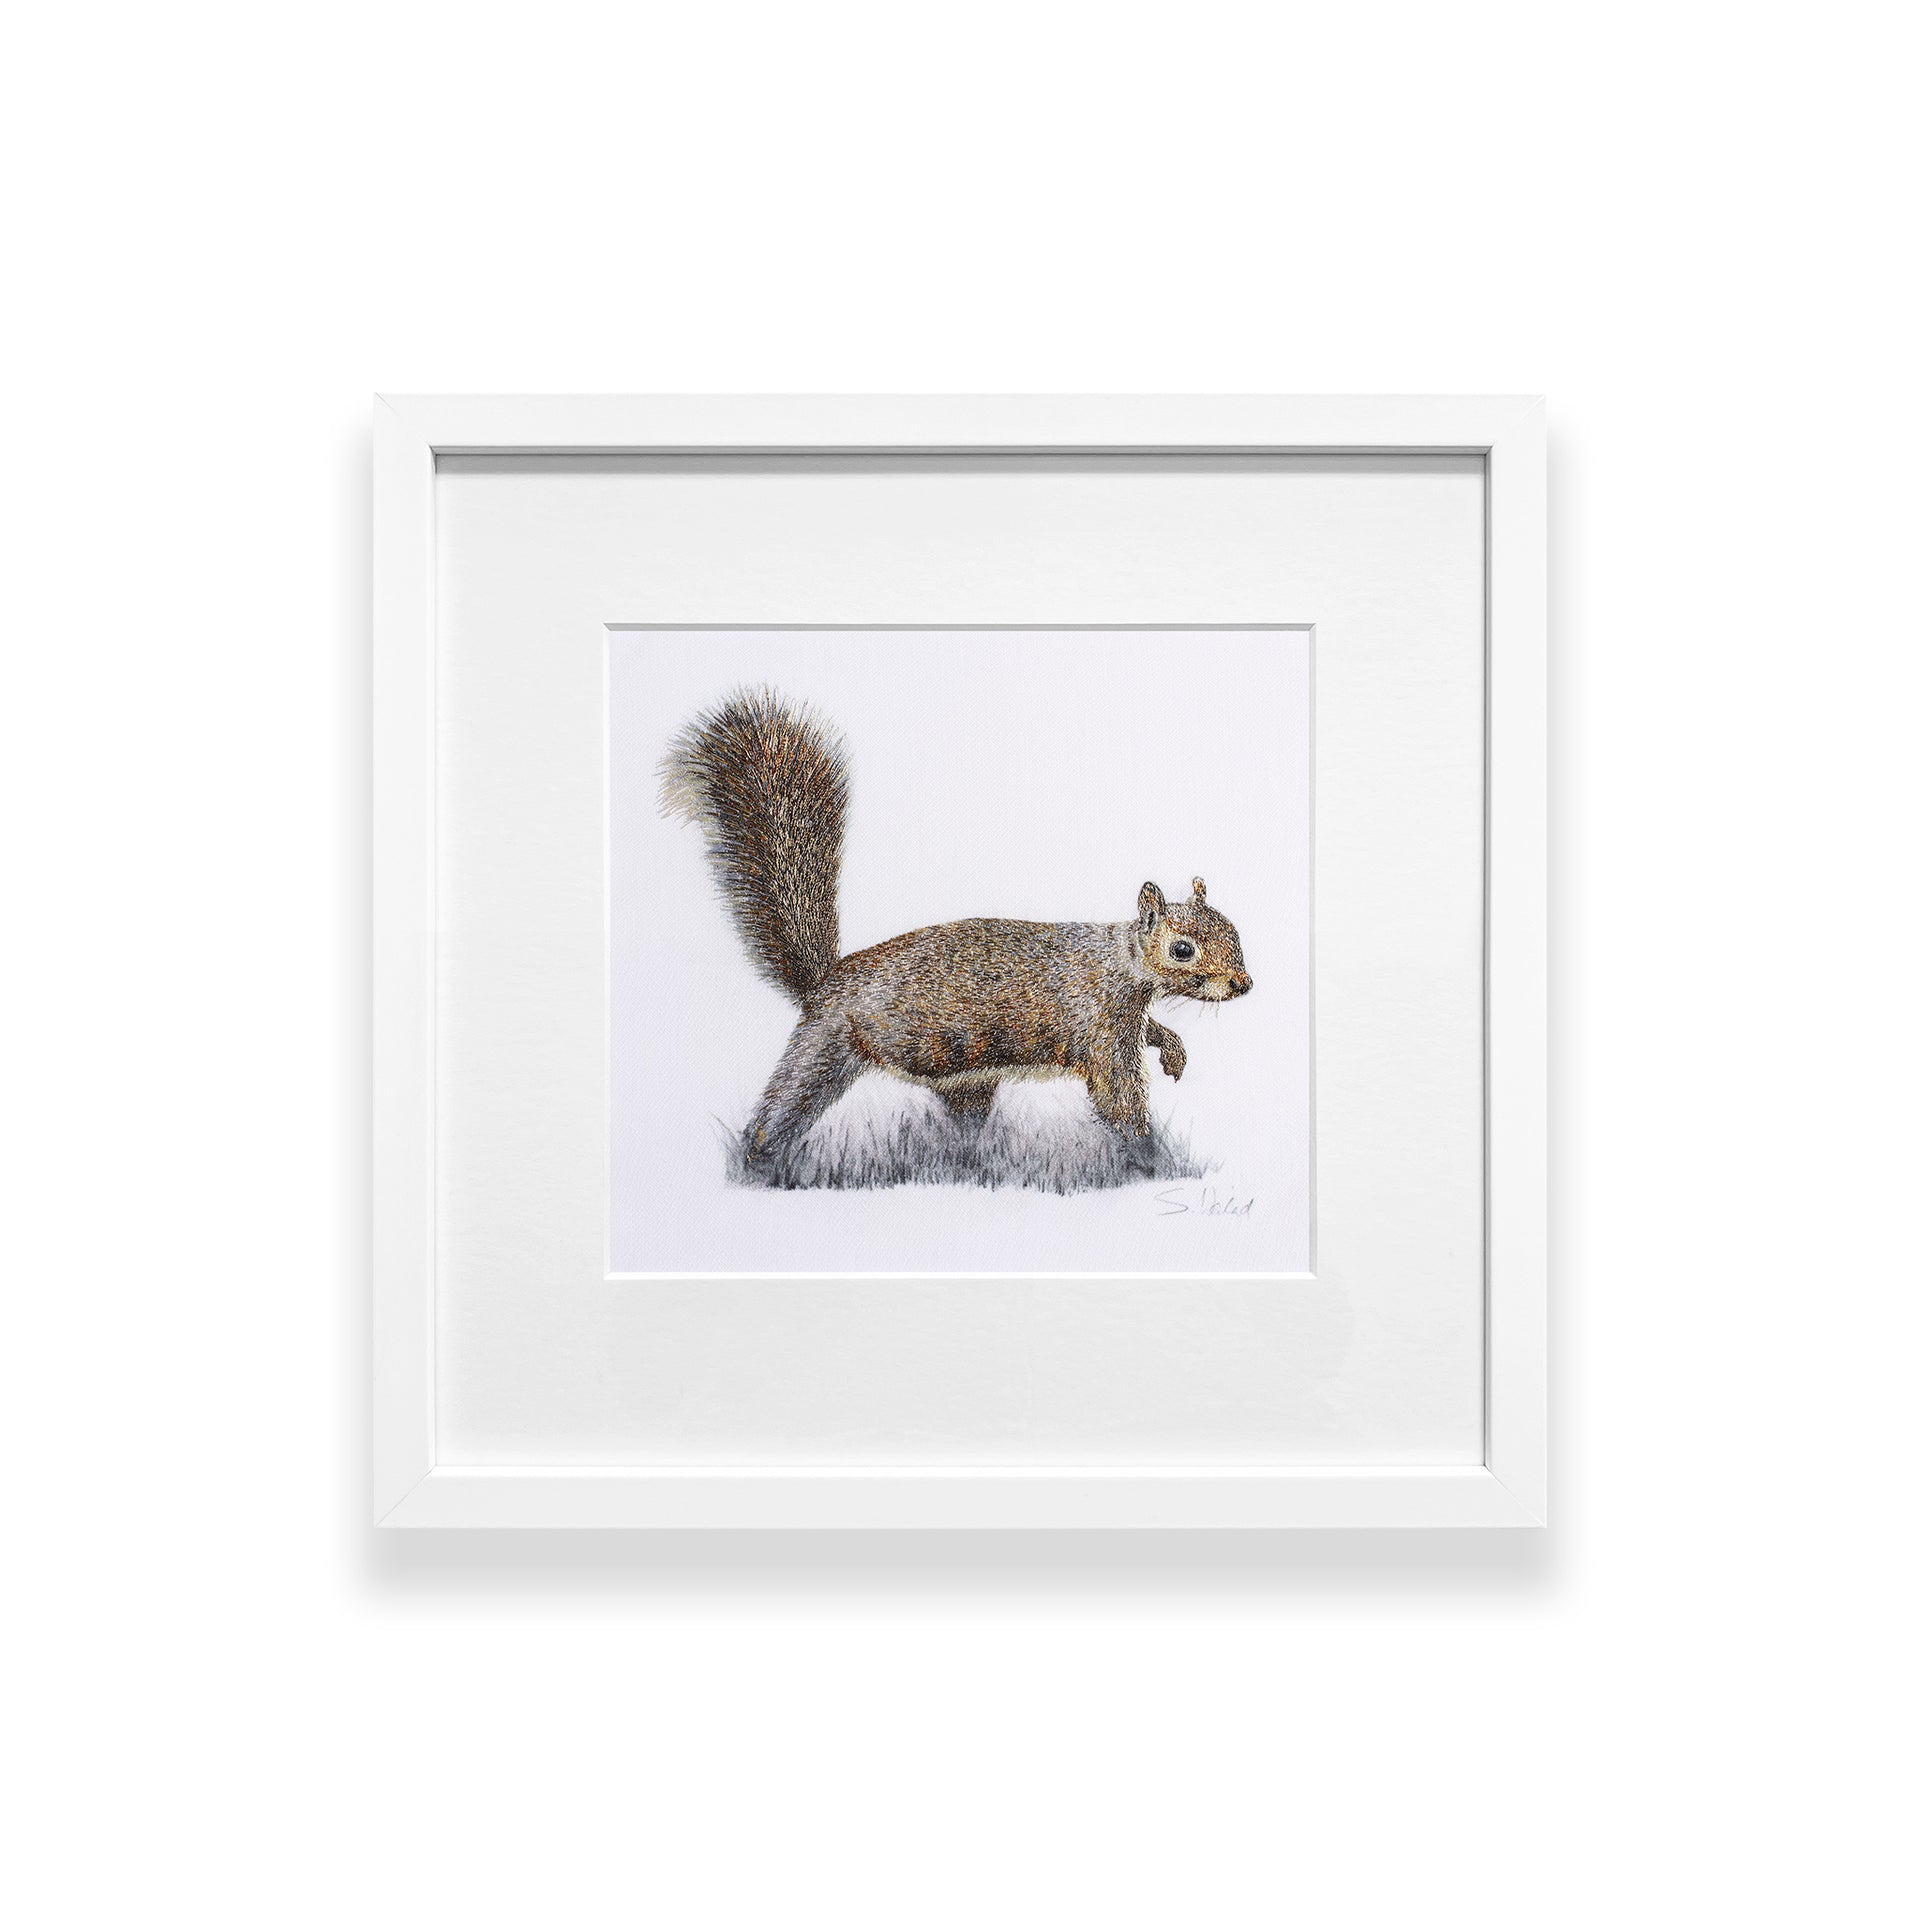 Hand embroidered squirrel original artwork in white frame